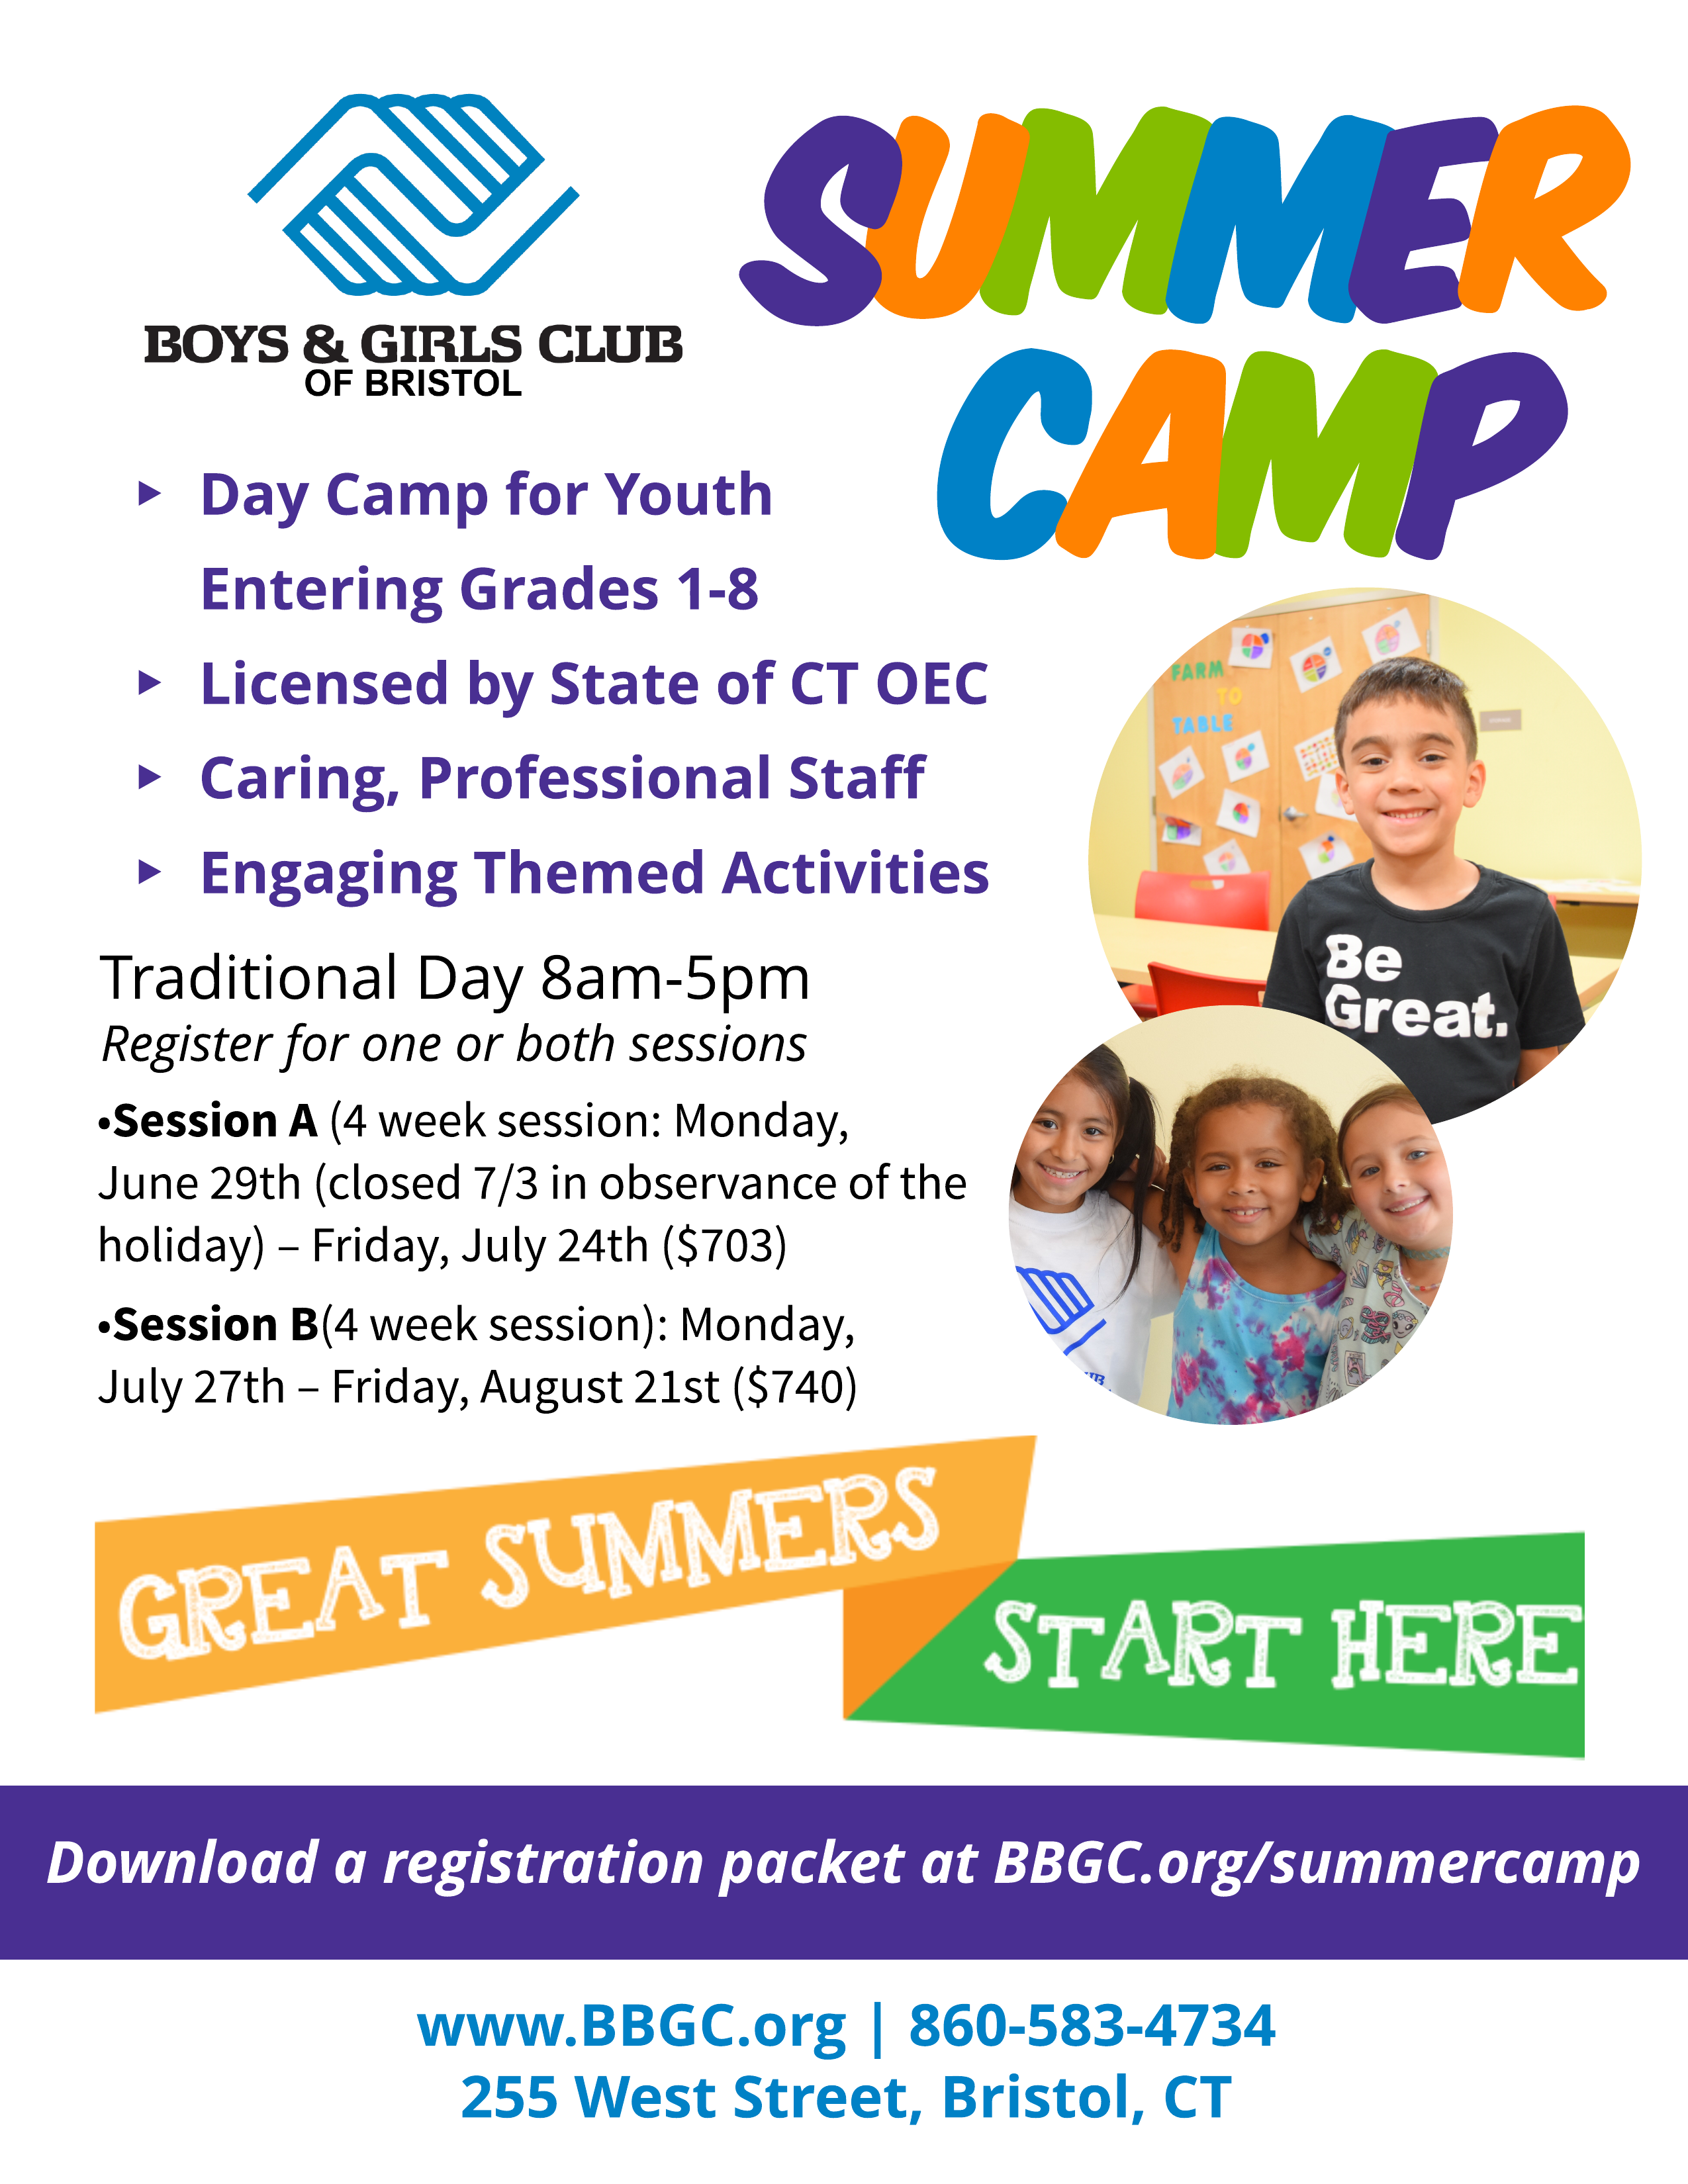 Summer Camp at Boys & Girls Club of Bristol Opens June 29